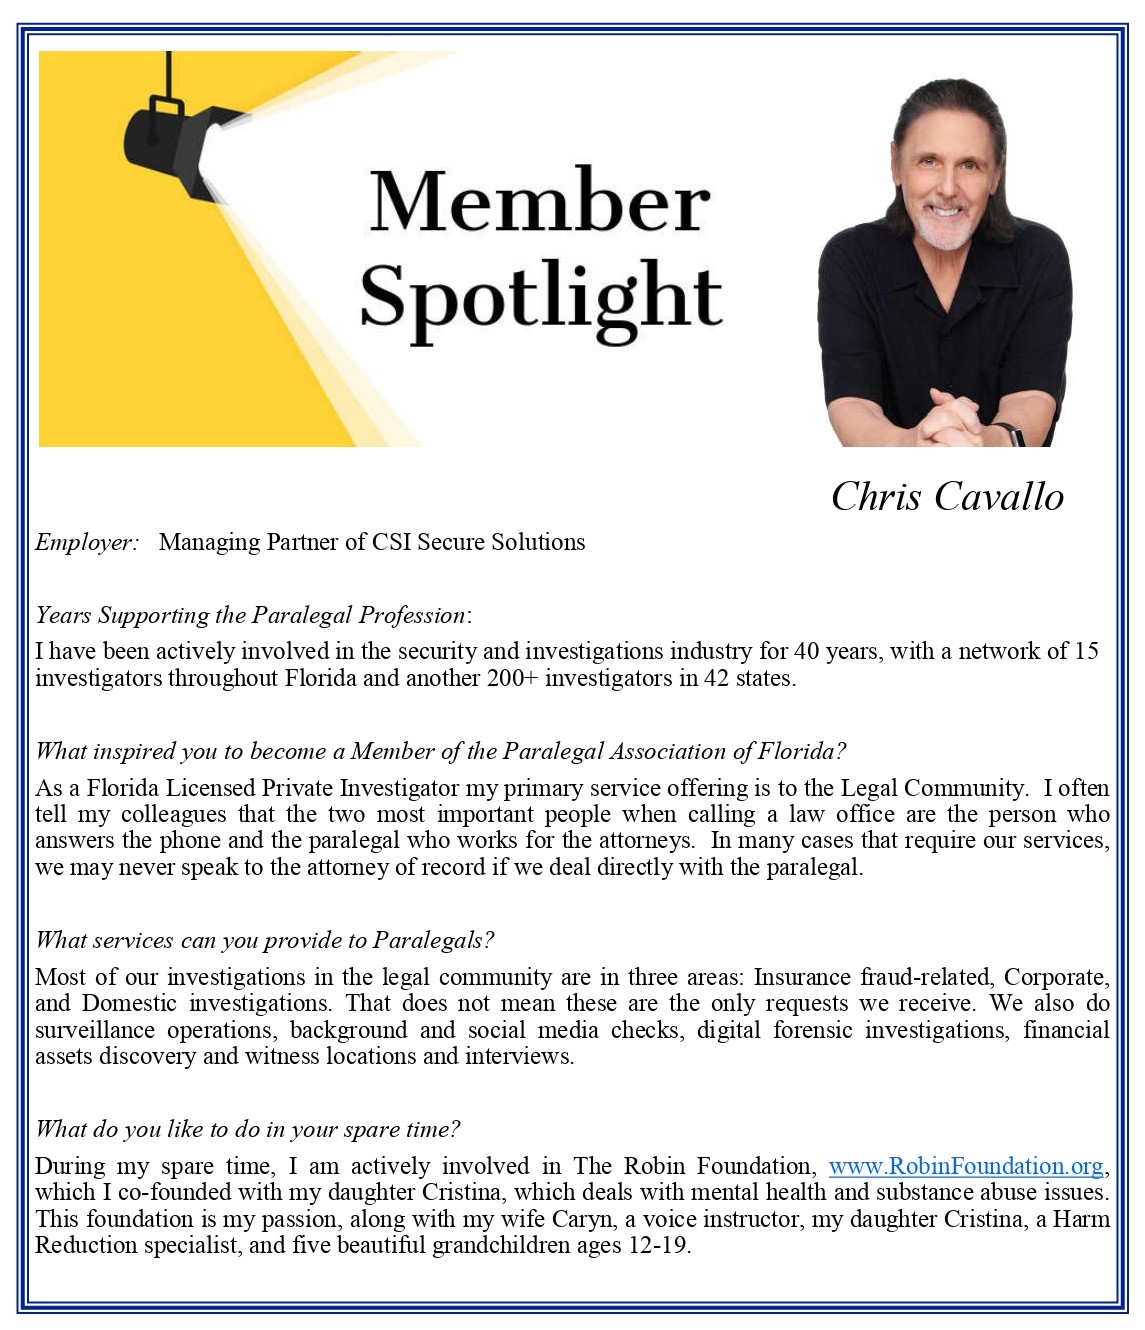 Member Spotlight in Paralegal Association of Florida, Inc. (PAF) Newsletter